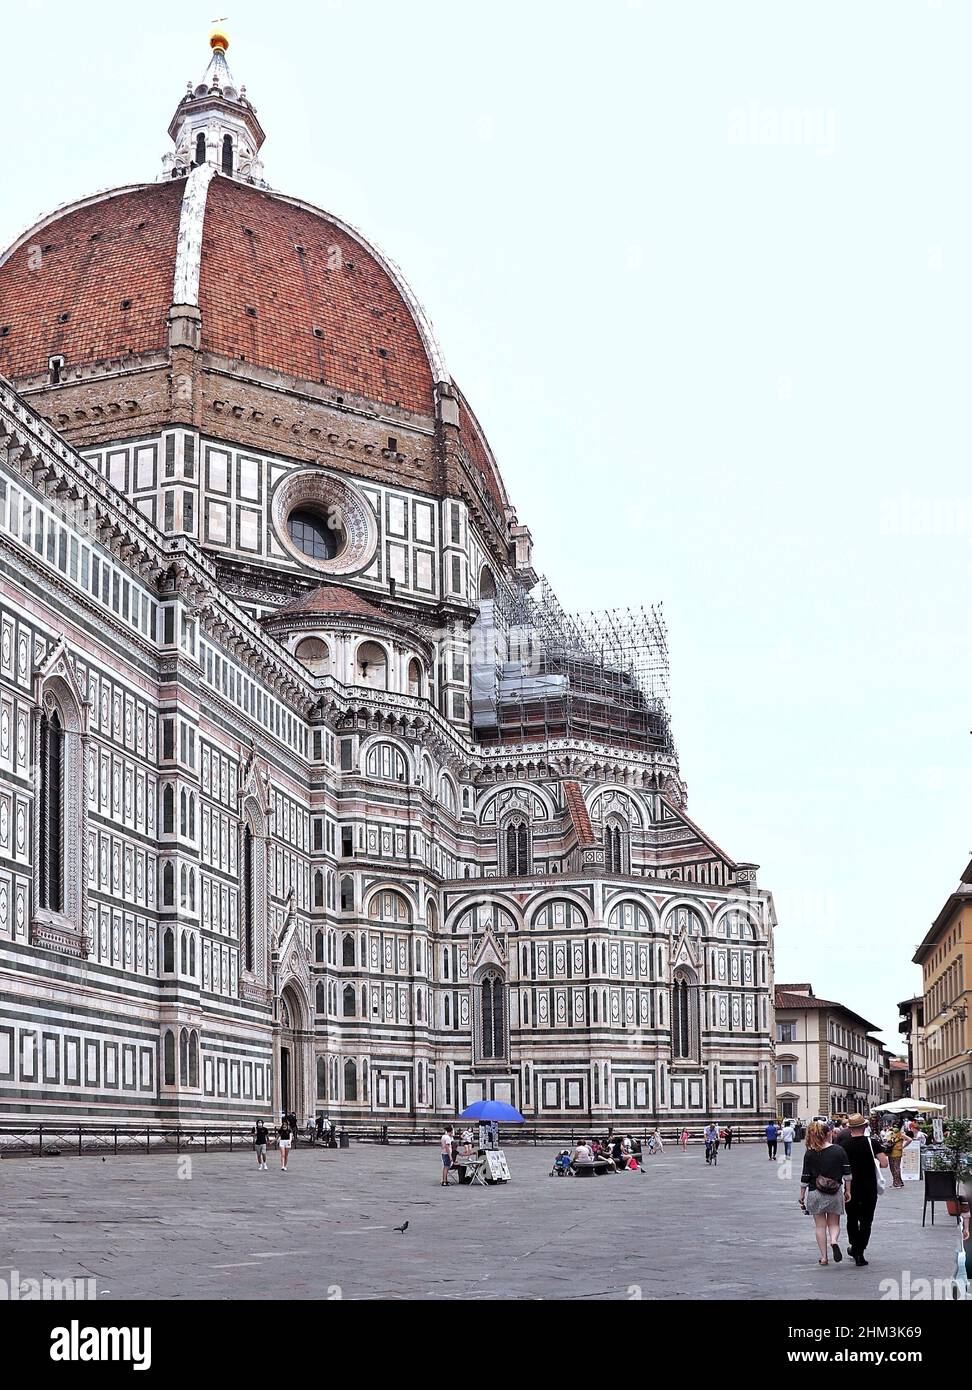 El Duomo de Florencia/ duomo di Firenze Foto de stock